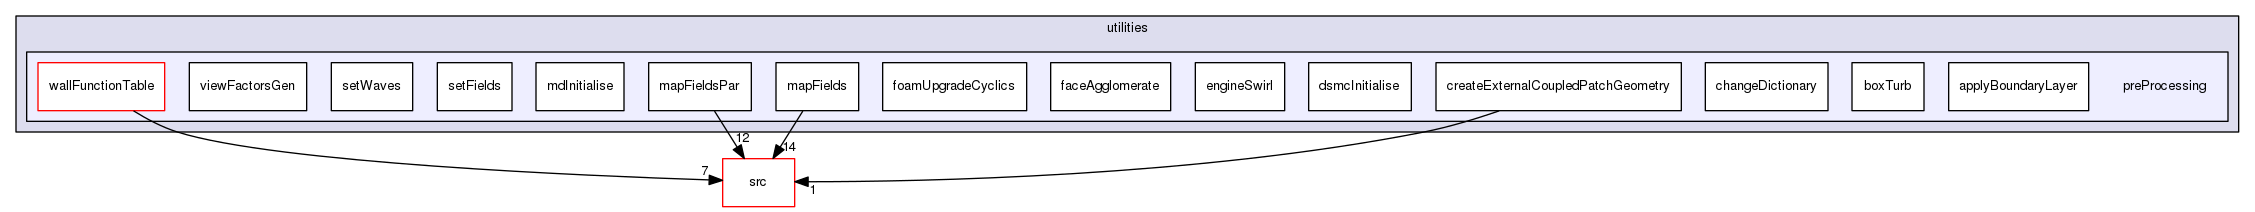 applications/utilities/preProcessing